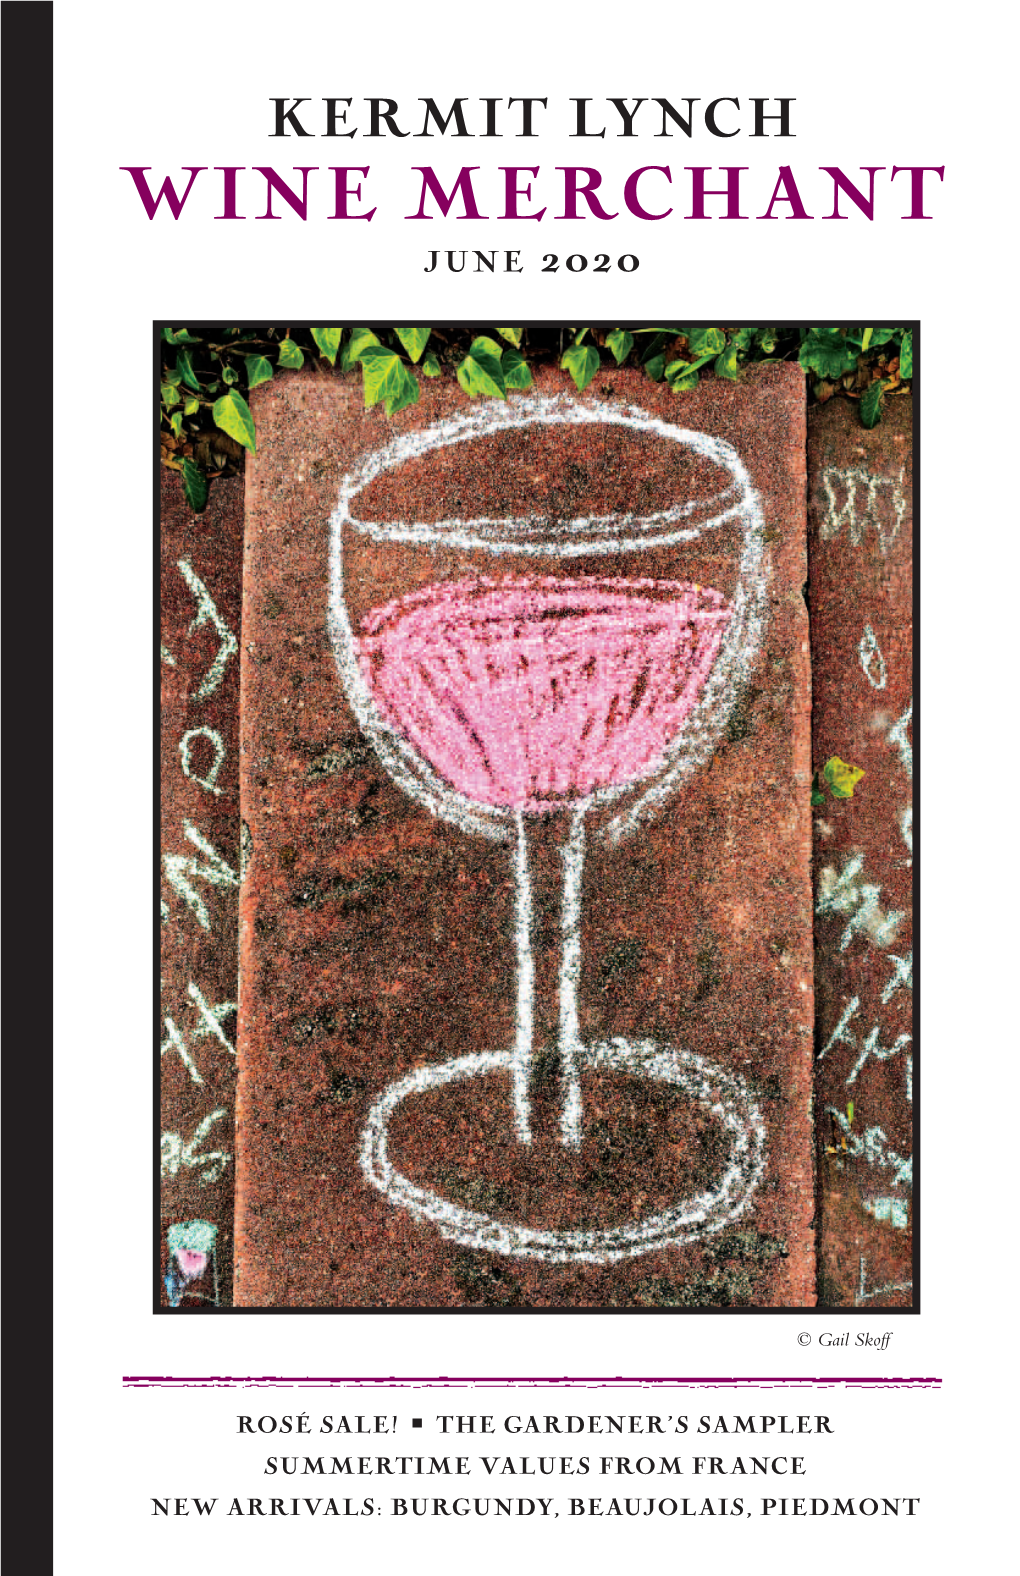 KLWM June 2020 Wine Brochure-Shipping.Indd